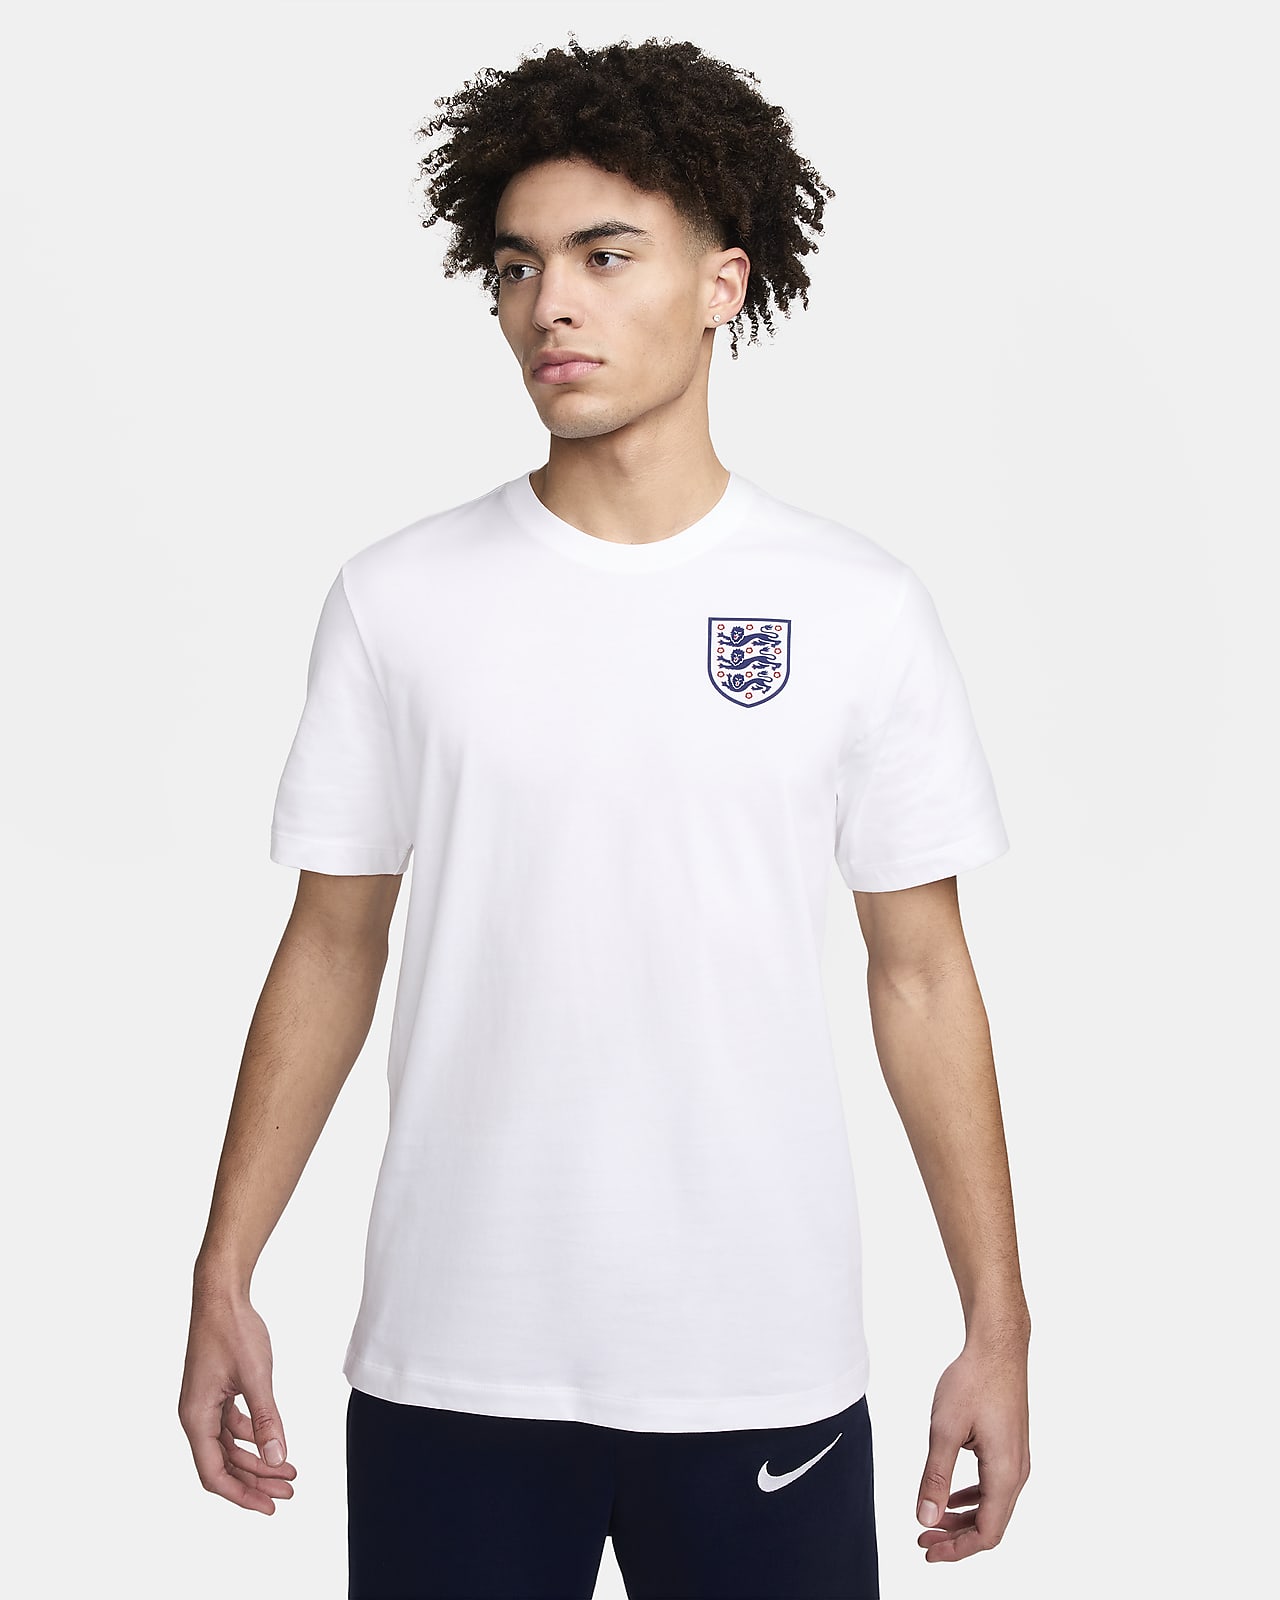 Inglaterra Camiseta Nike Football - Hombre